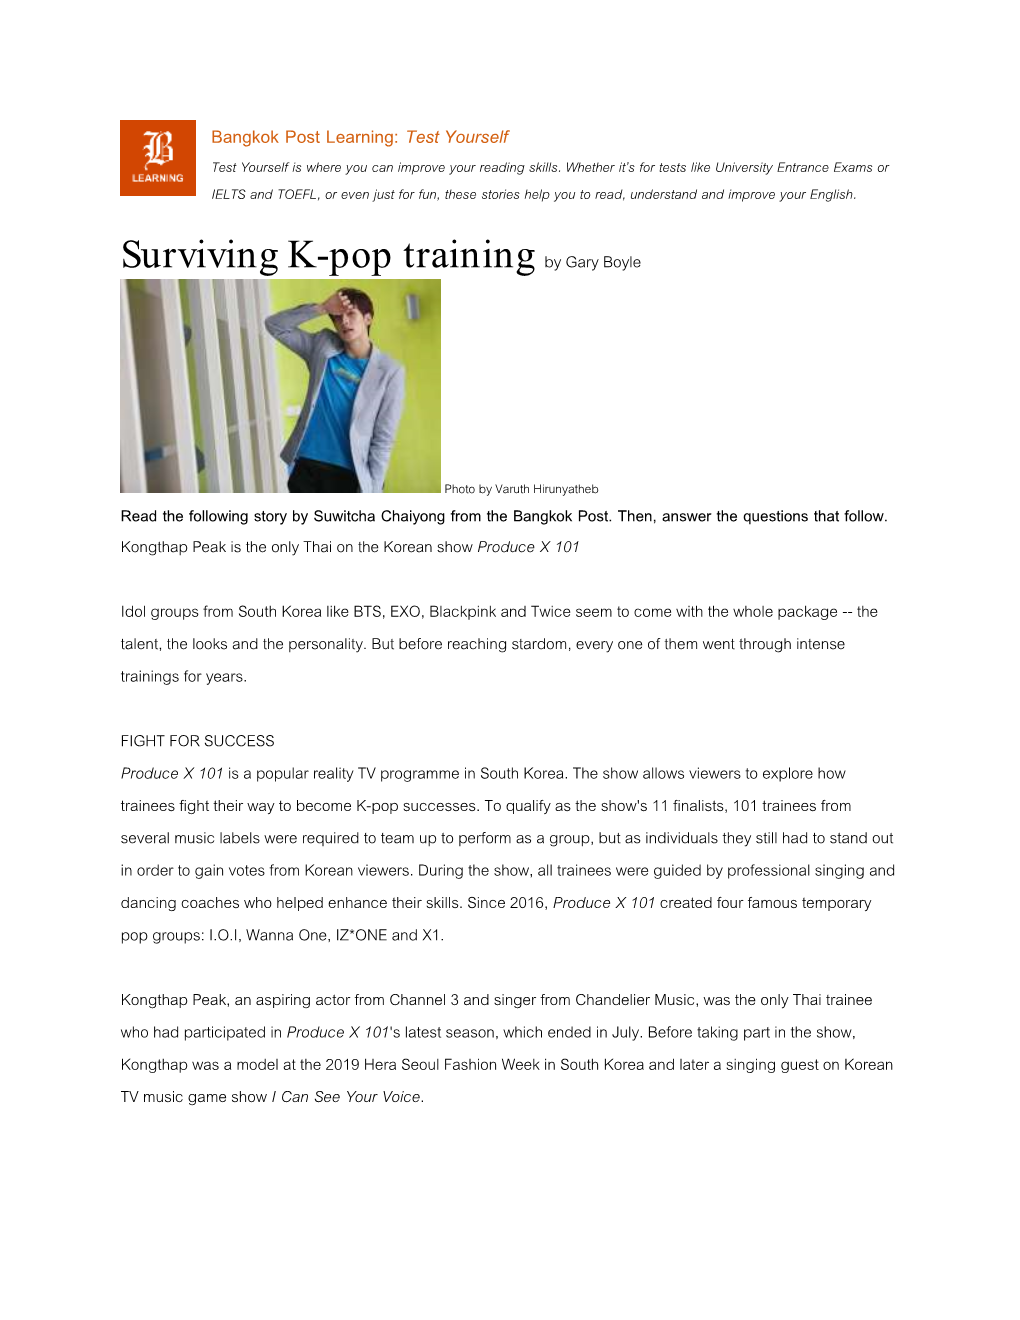 Surviving K-Pop Training by Gary Boyle